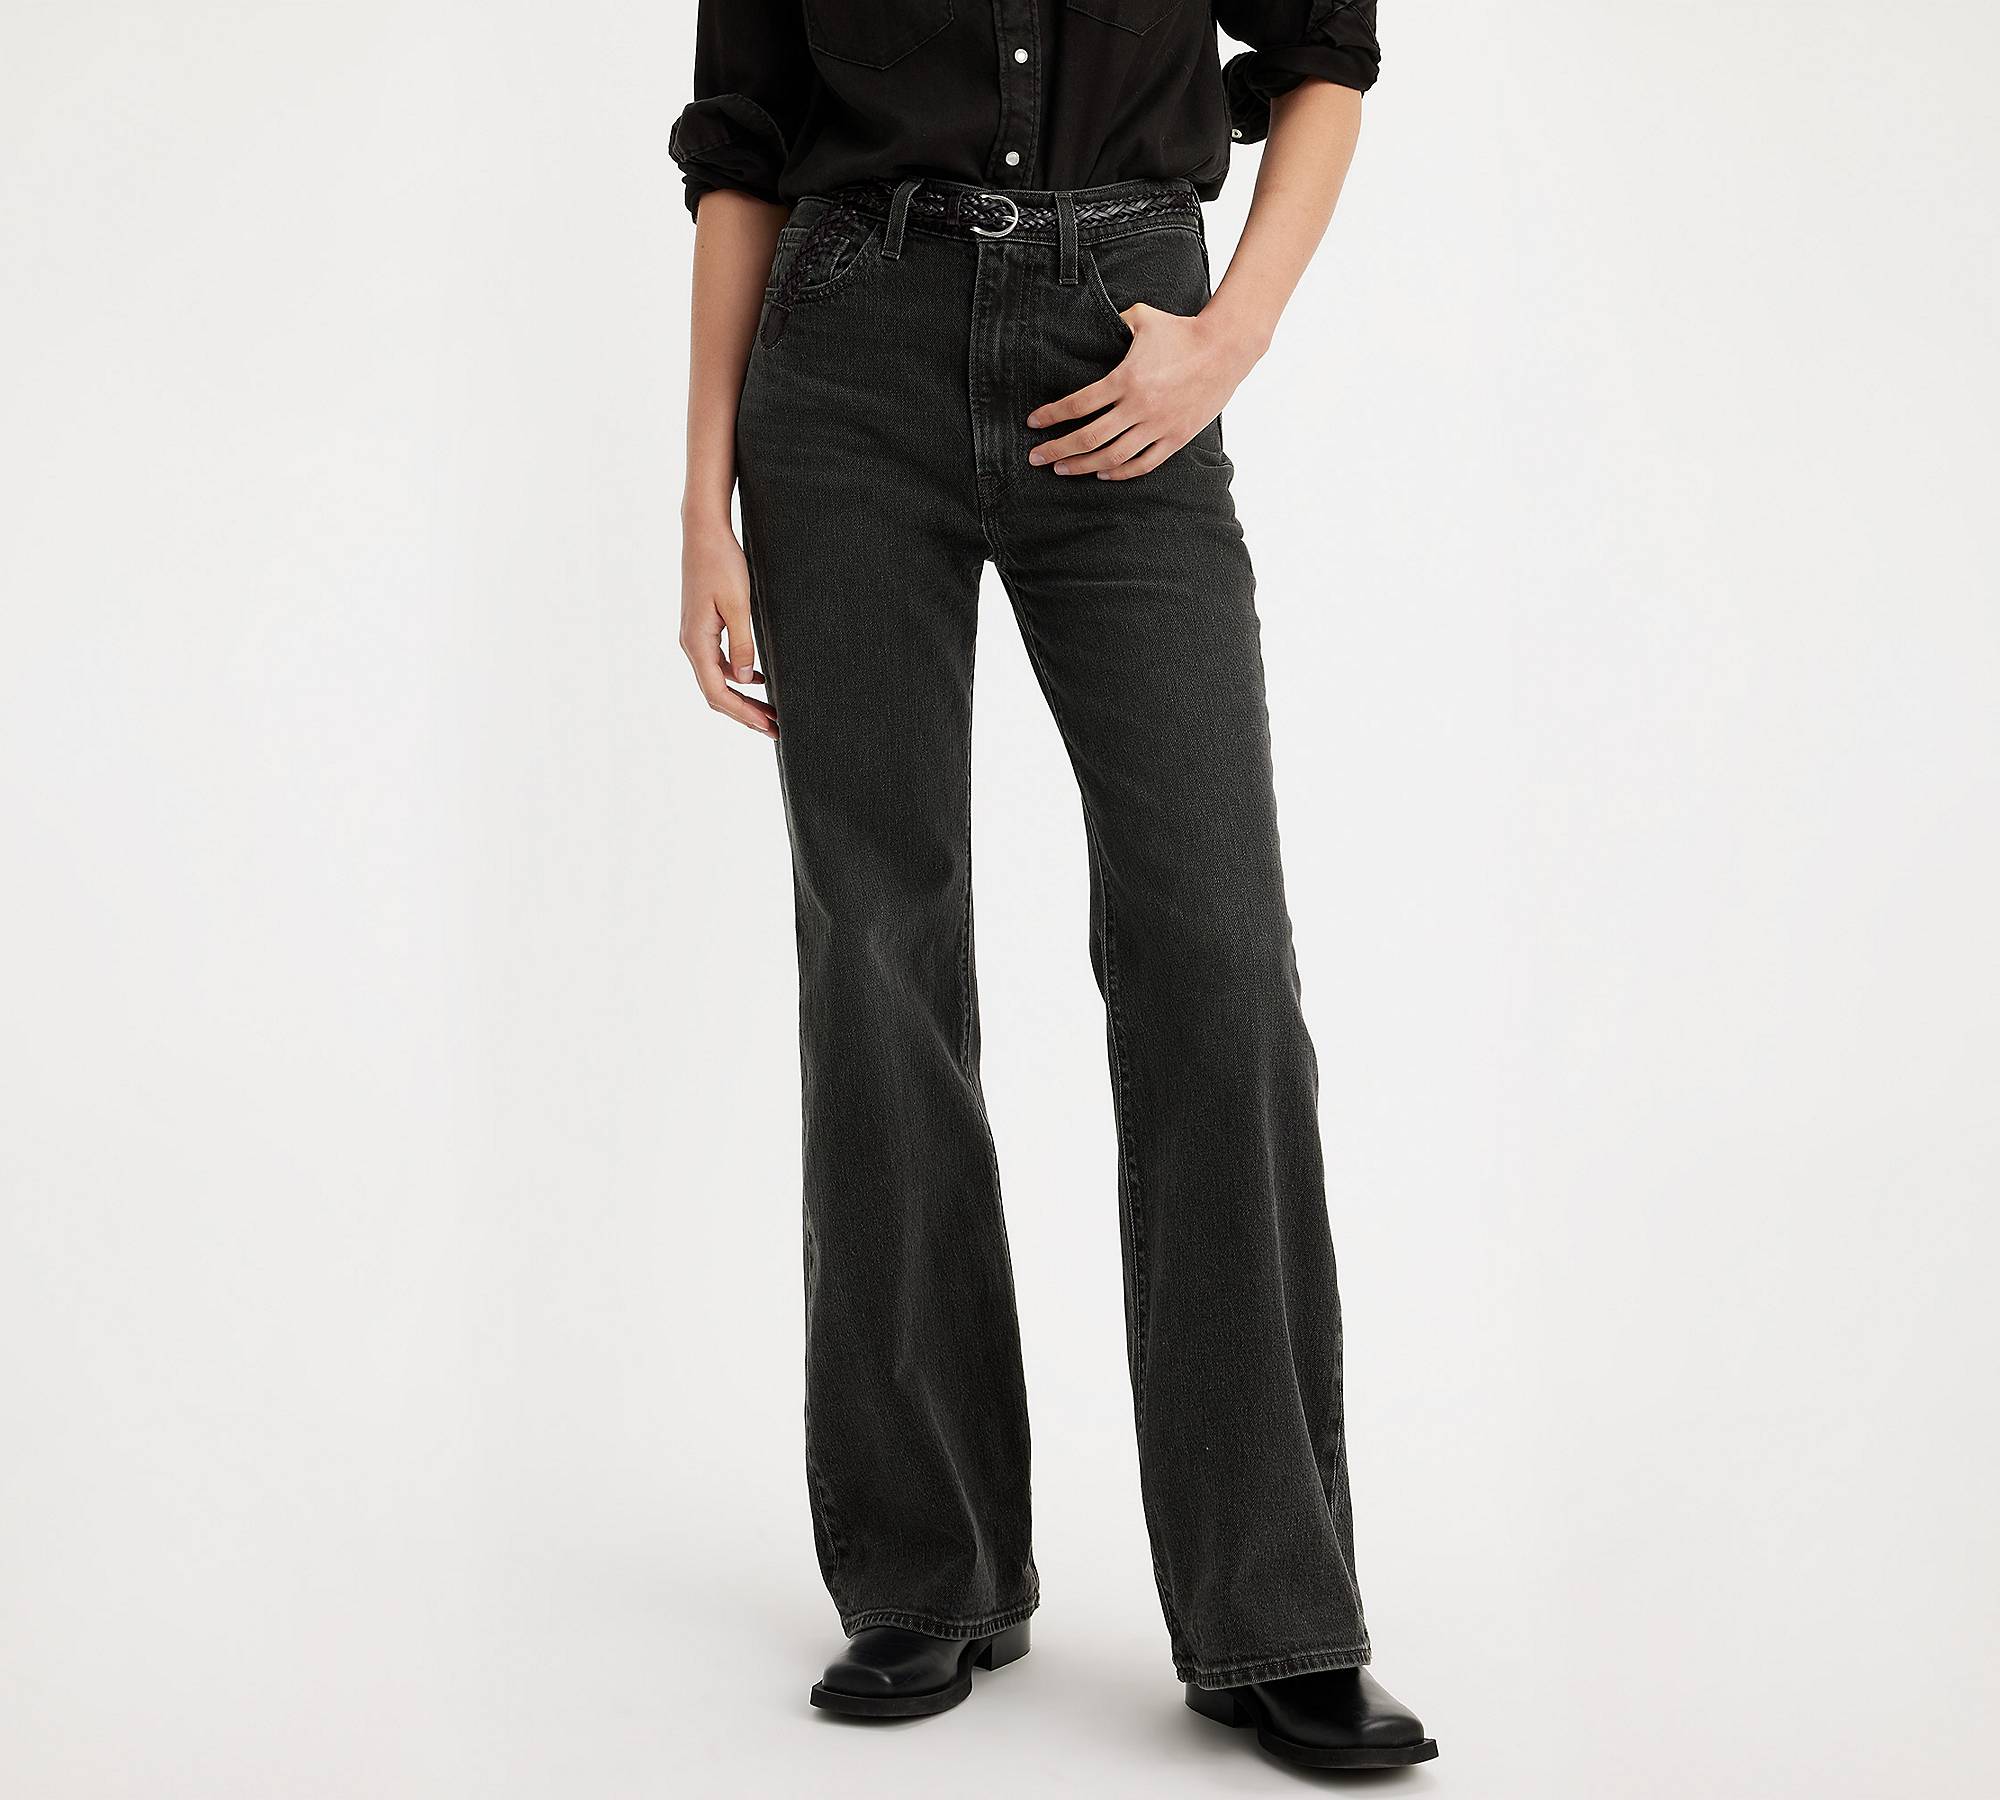 Ribcage Bell Women's Jeans - Black